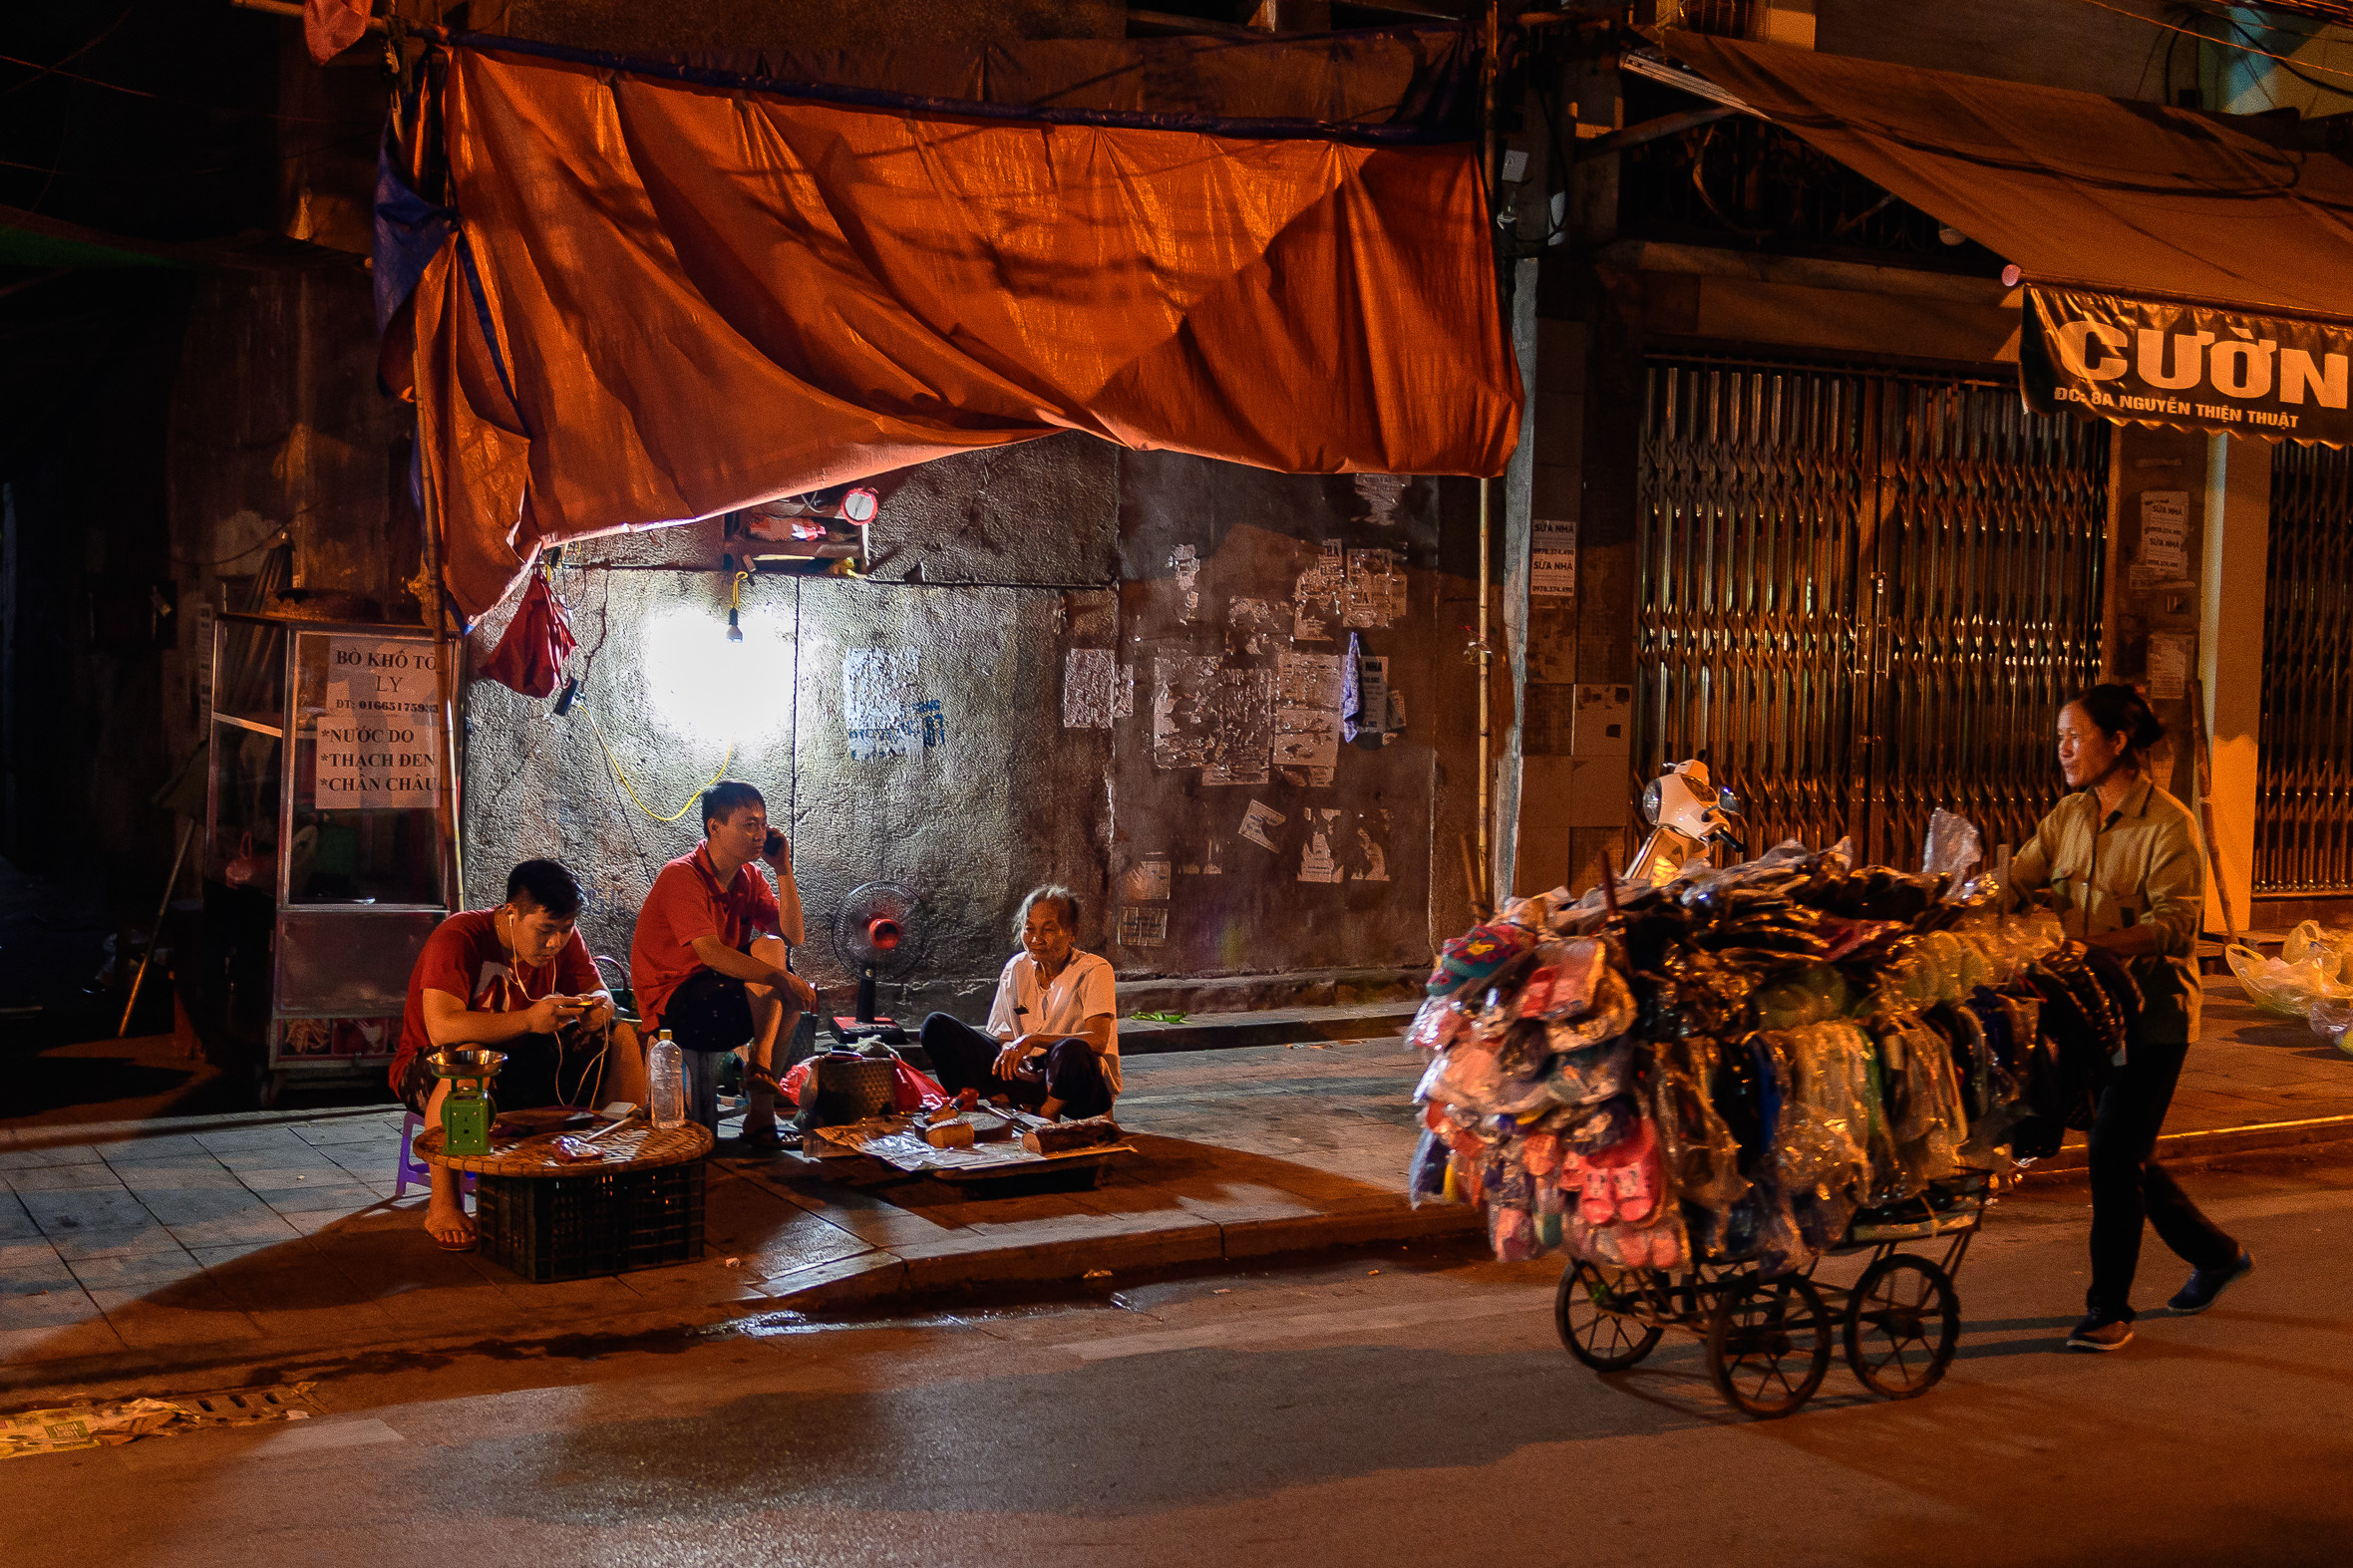 Nighttime in Hanoi